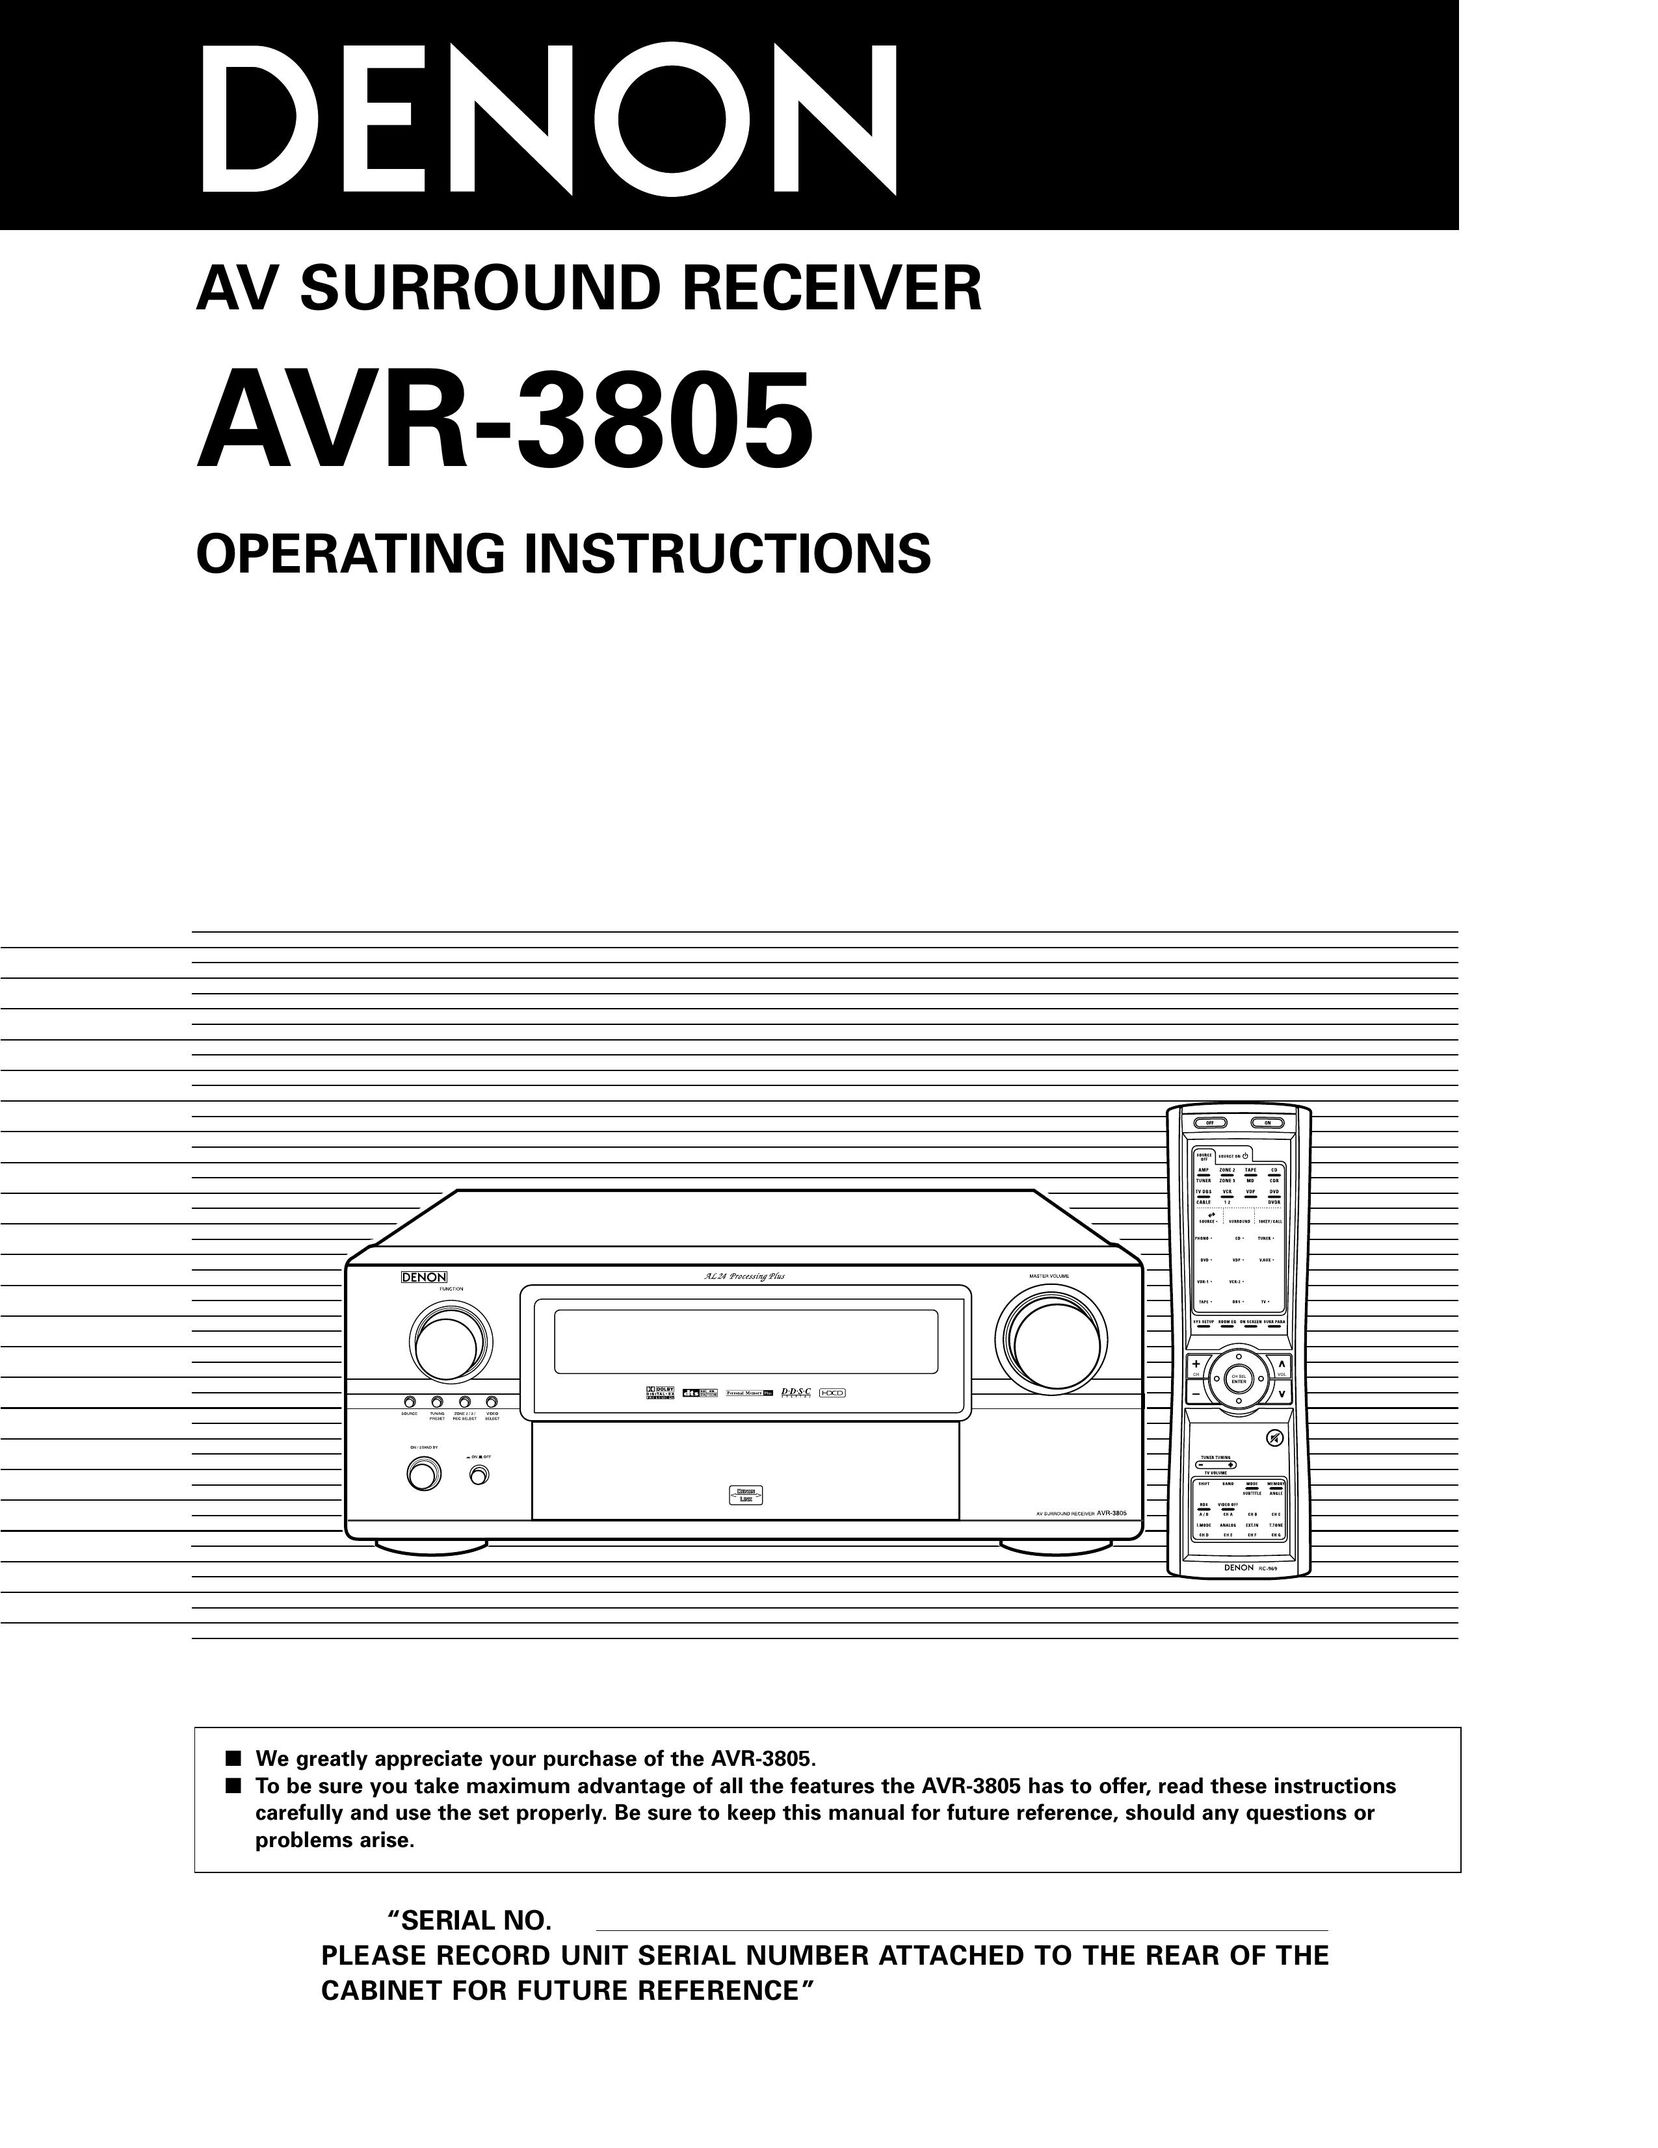 Denon AVR-3805 Stereo System User Manual